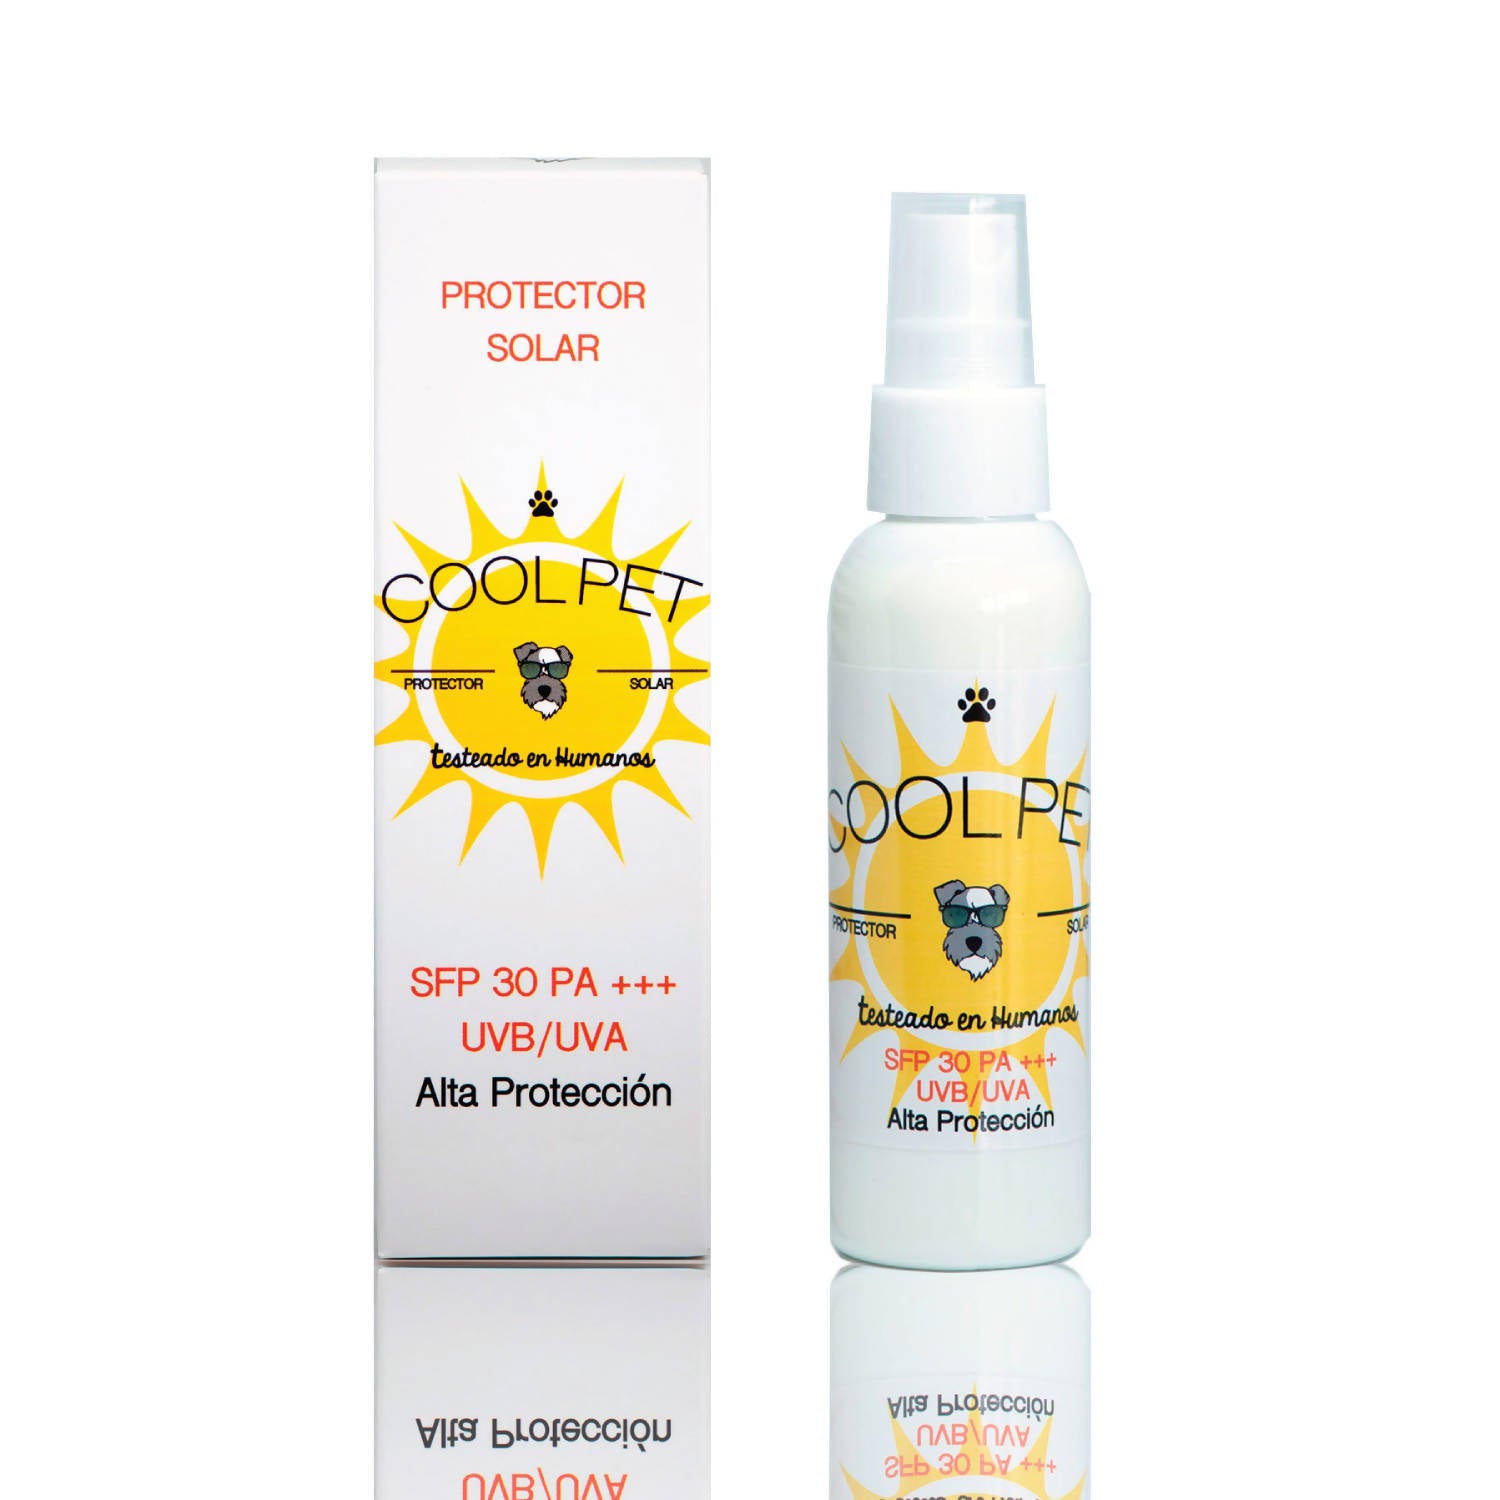 Protector Solar SFP 30